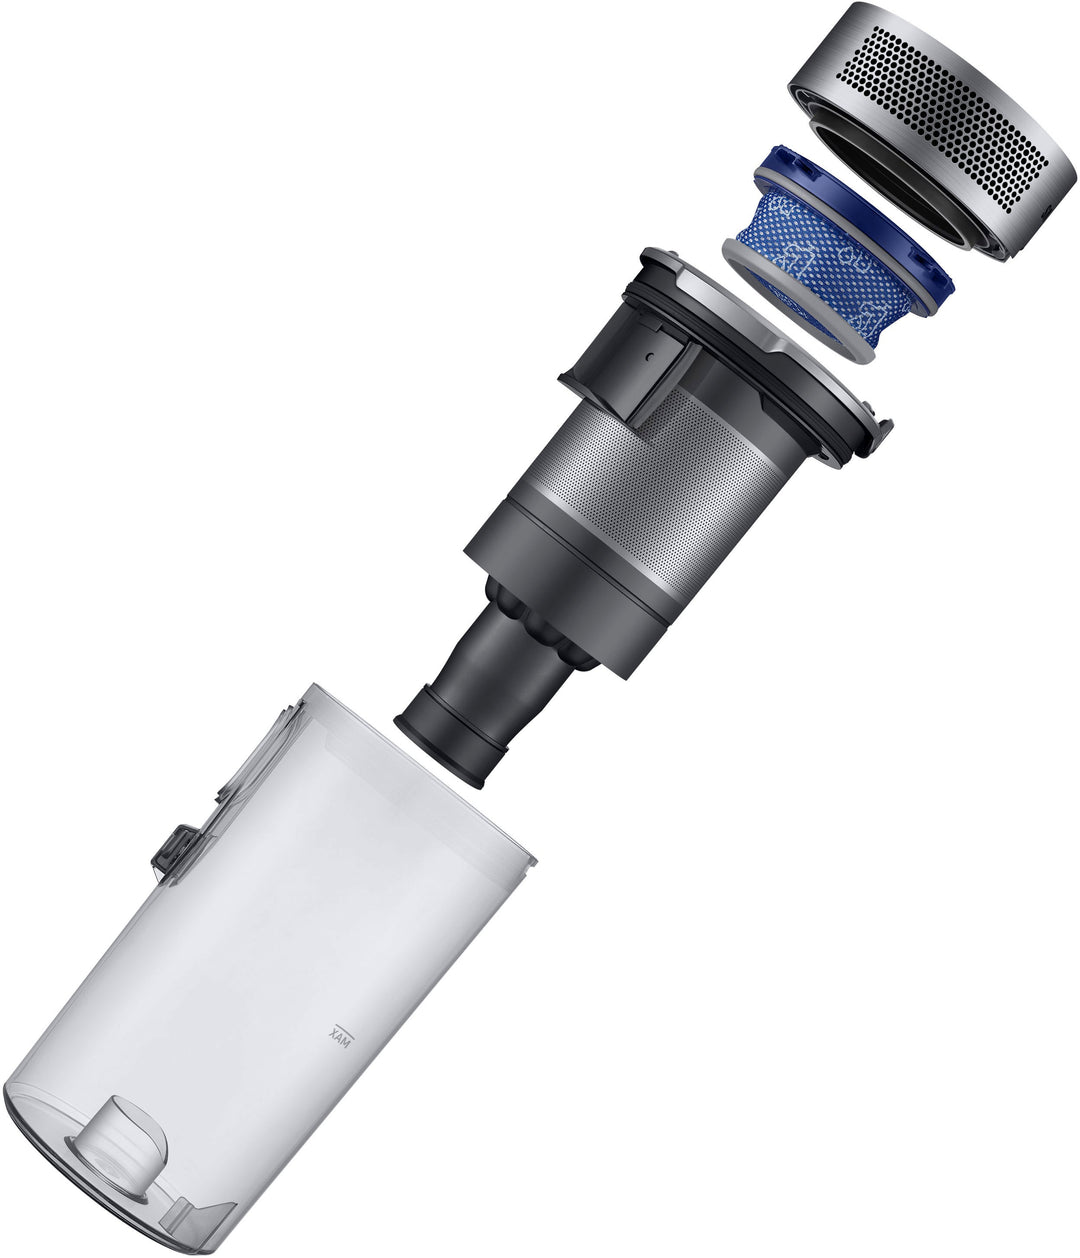 Samsung - Jet™ 75+ Cordless Stick Vacuum with Additional Battery - Titan ChroMetal_4